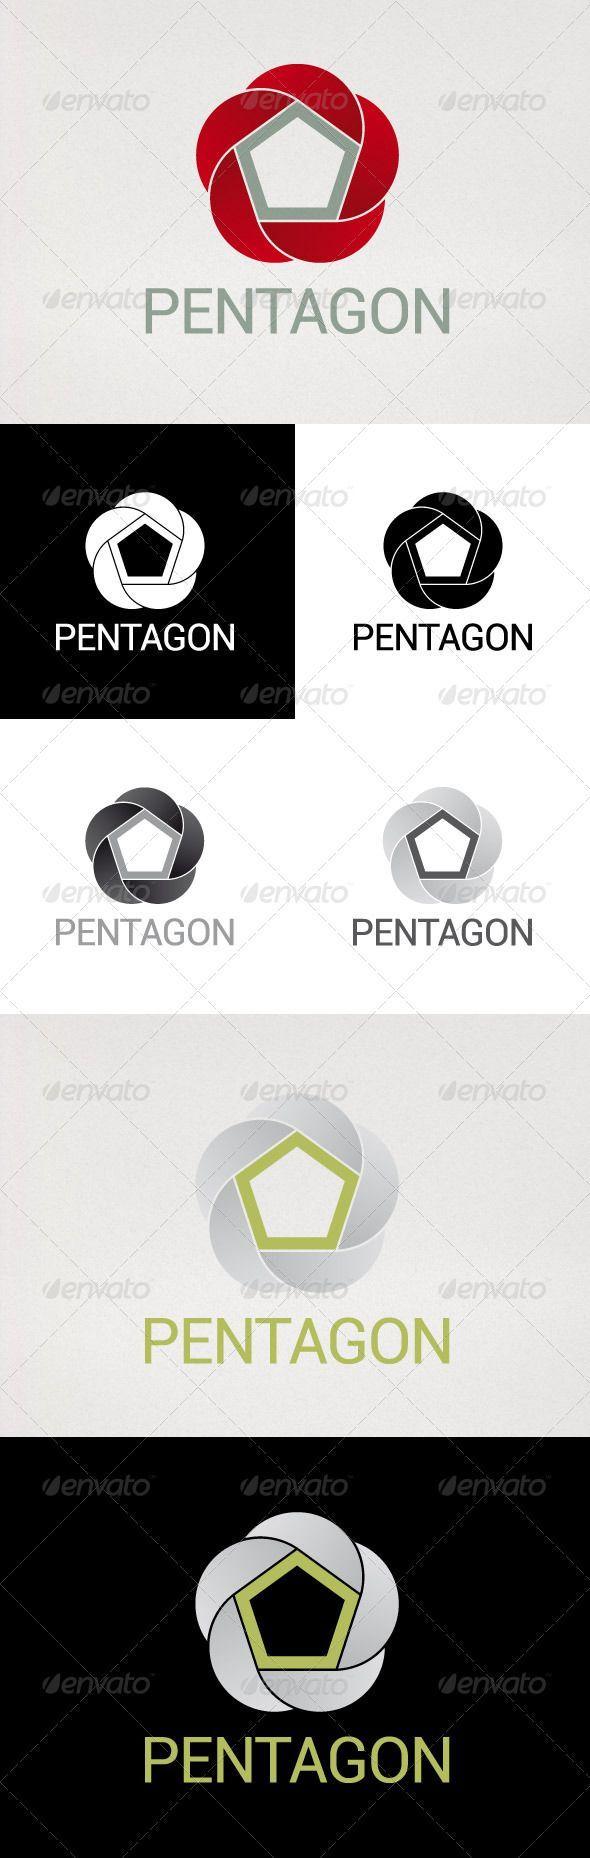 Green Red Pentagon Logo - aperture flower logo - Google Search | LOGO | Pinterest | Logos ...